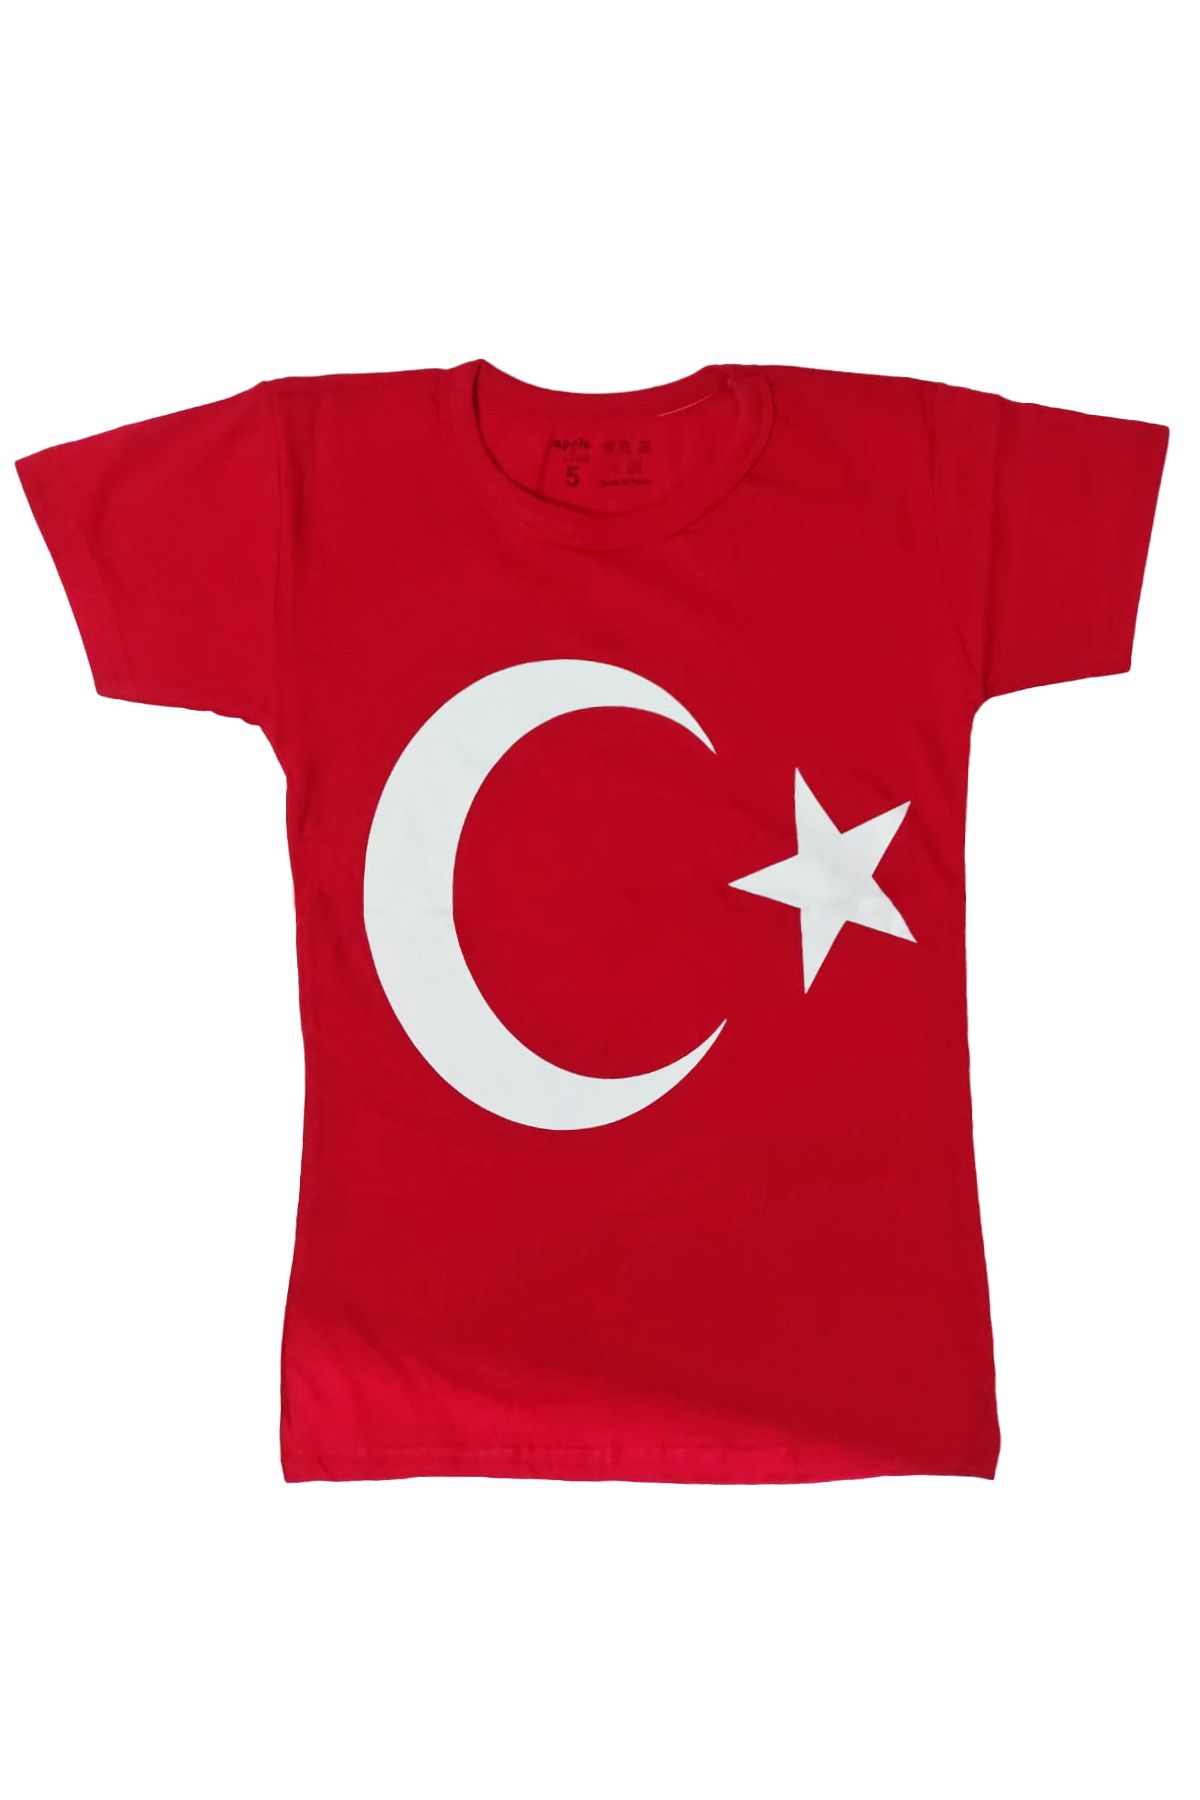 Limmy Türk Bayraklı Tişört Pamuklu Kırmızı Ay Yıldız Çocuk Tshirt- 11 Yaş